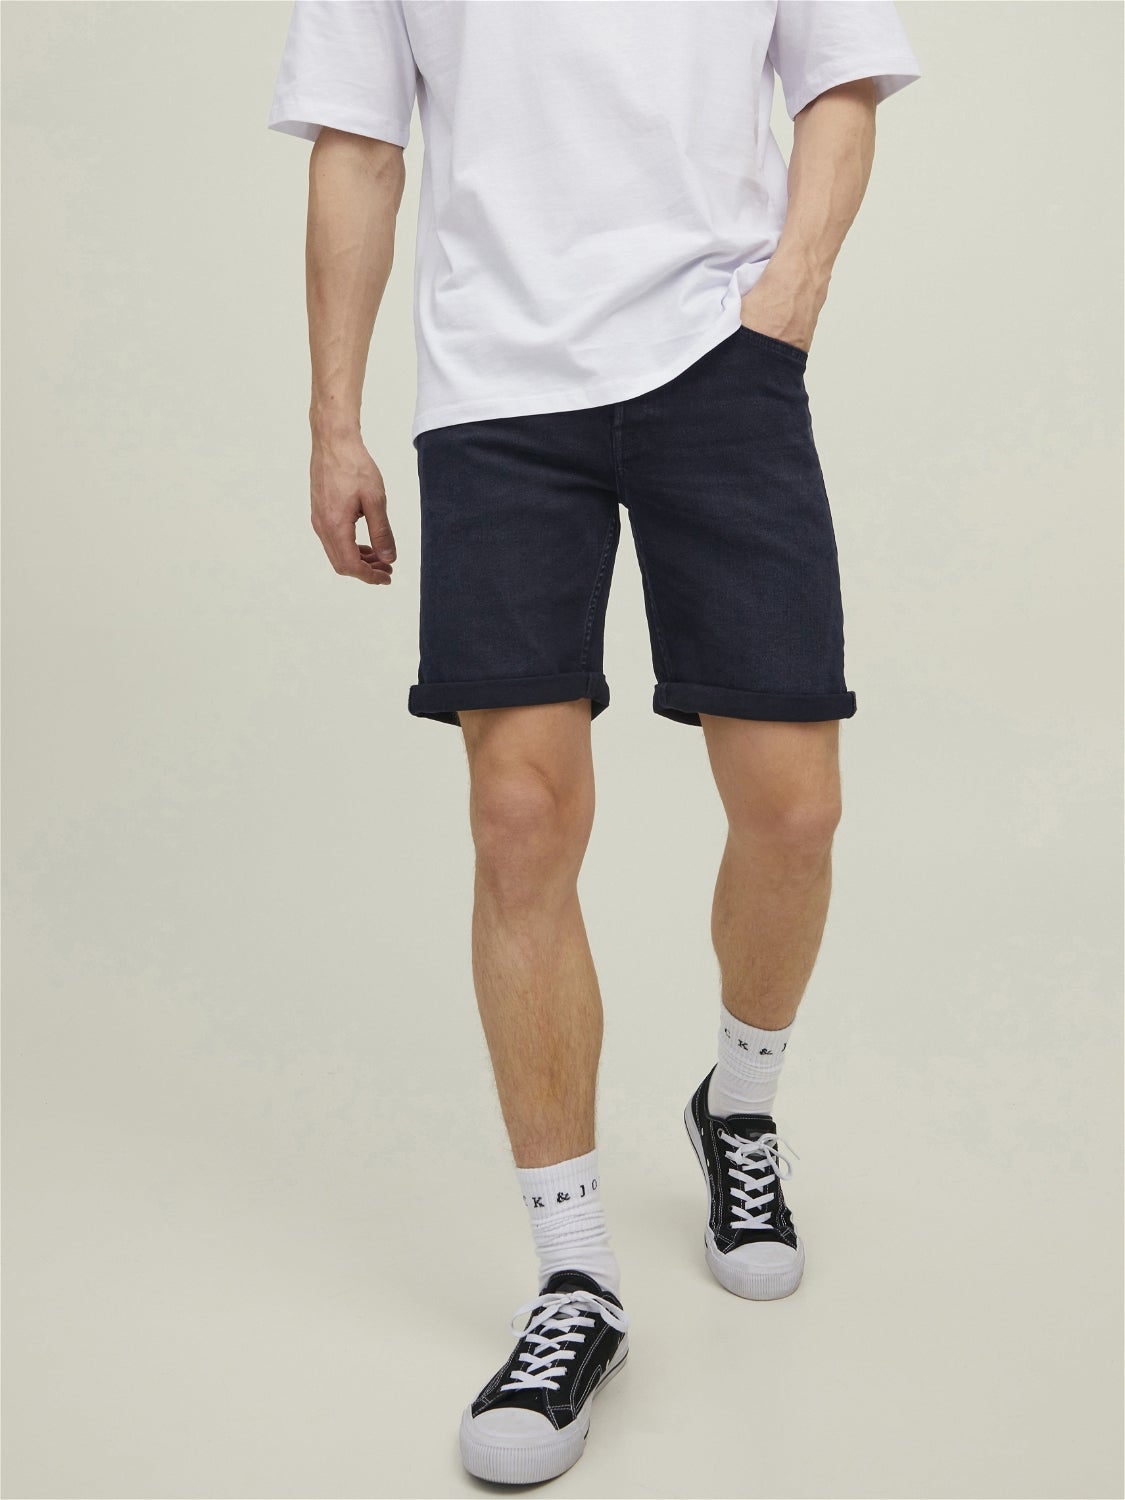 Green M Jack & Jones Jack & Jones shorts discount 79% MEN FASHION Trousers Shorts 